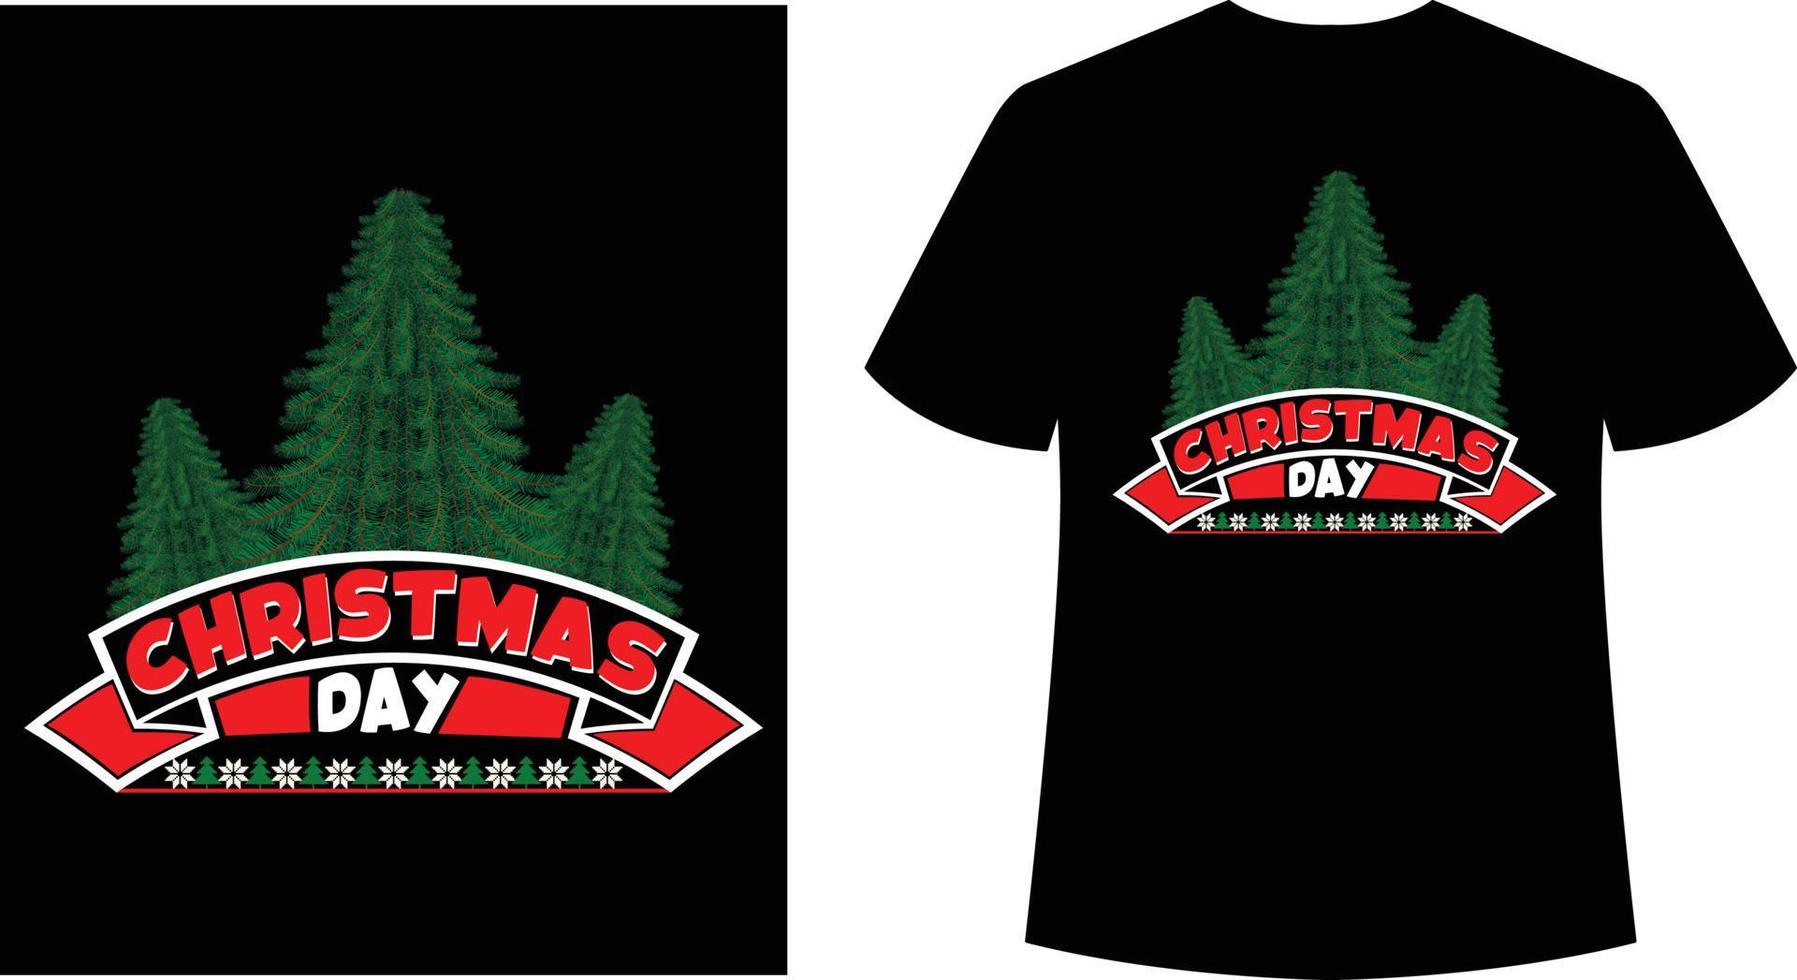 X-mas Day or Christmas Day T-Shirt Design vector